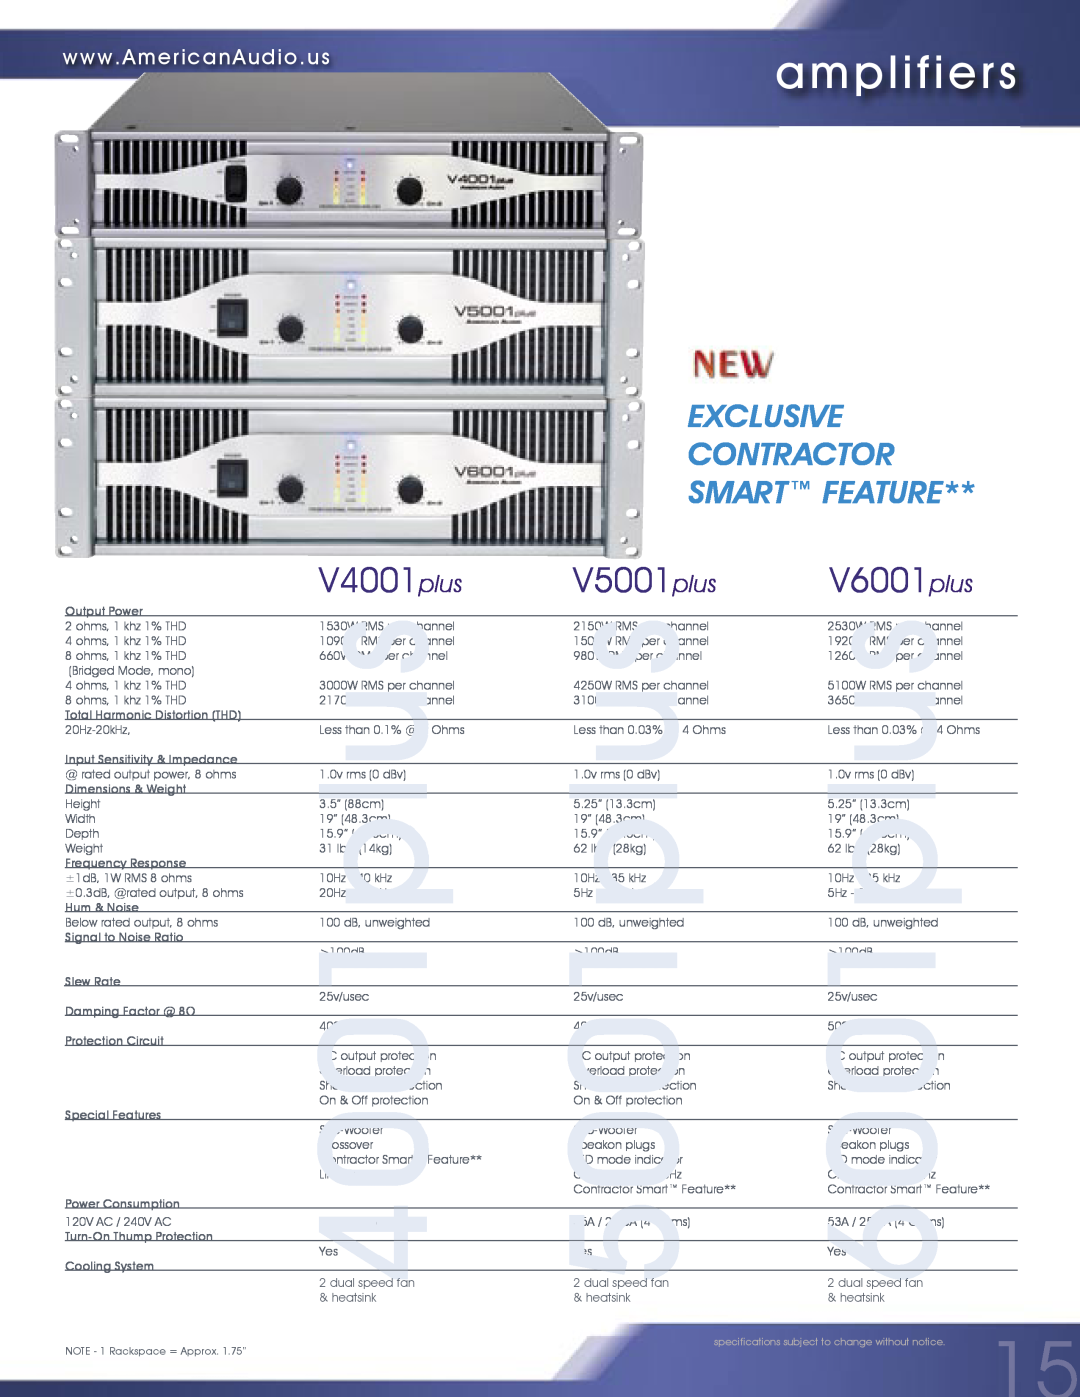 American Audio MCD-810 manual Exclusive Contractor Smart Feature, amplifiers, V4001plus, V5001plusV6001plus 